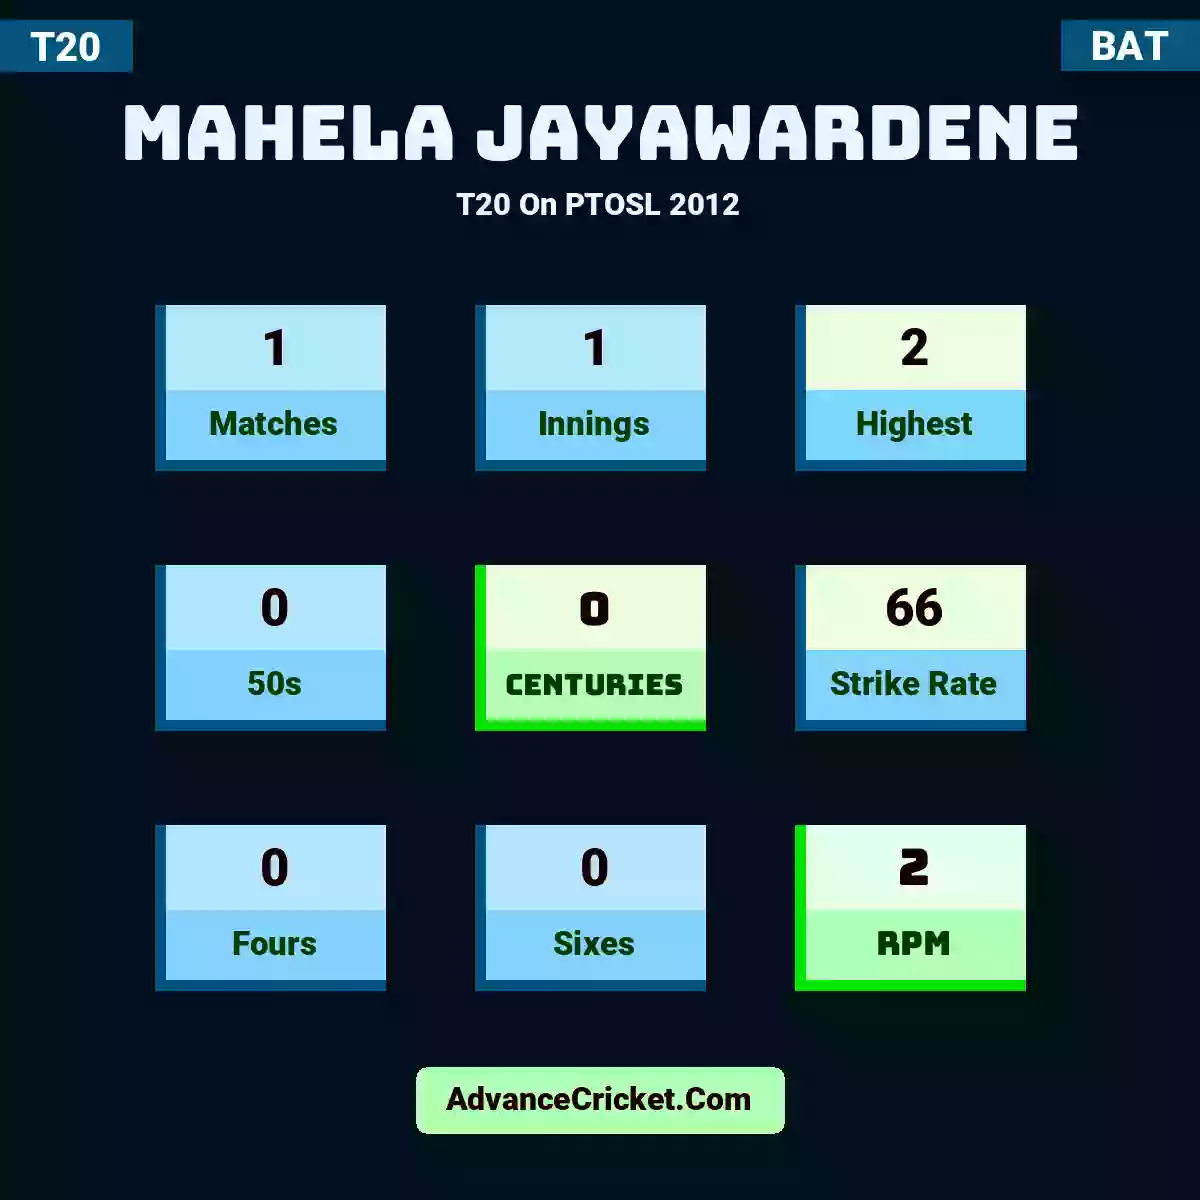 Mahela Jayawardene T20  On PTOSL 2012, Mahela Jayawardene played 1 matches, scored 2 runs as highest, 0 half-centuries, and 0 centuries, with a strike rate of 66. M.Jayawardene hit 0 fours and 0 sixes, with an RPM of 2.